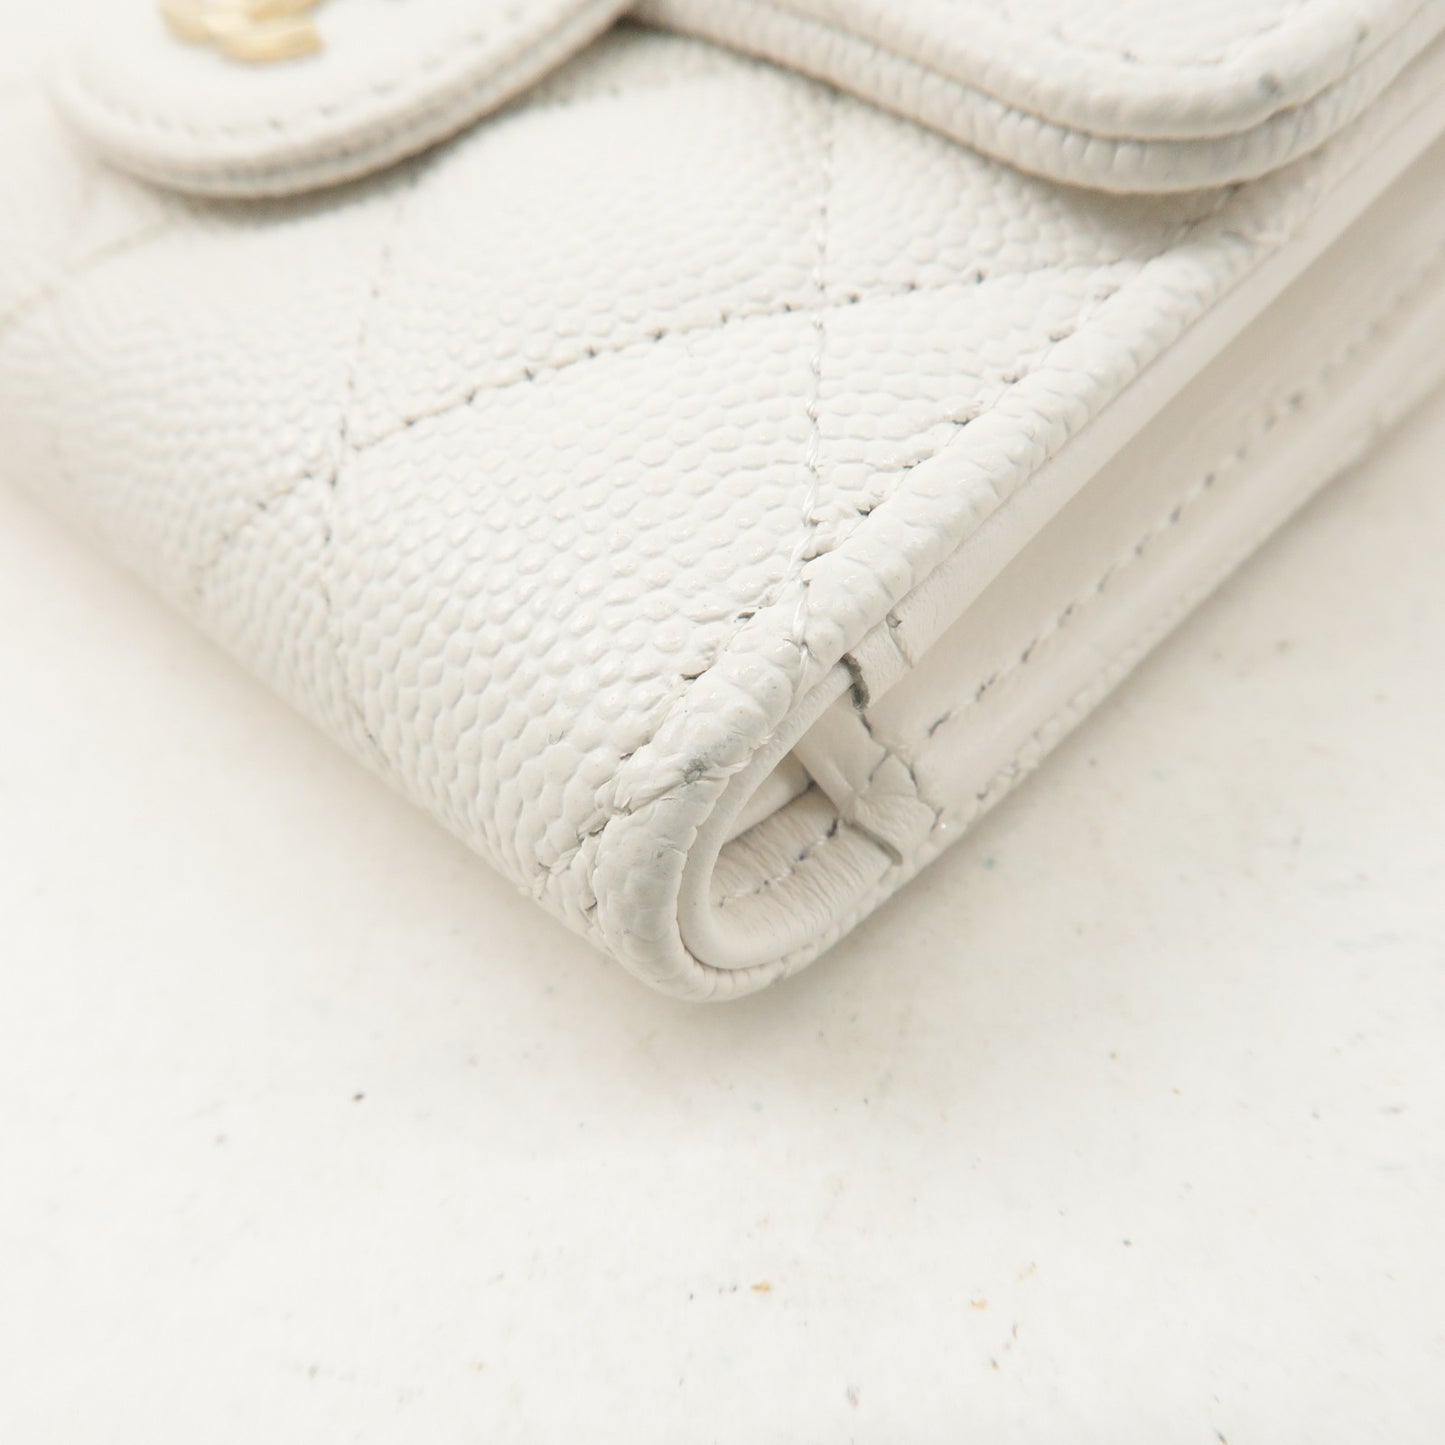 CHANEL Matelasse Caviar Skin Compact Wallet White A84029